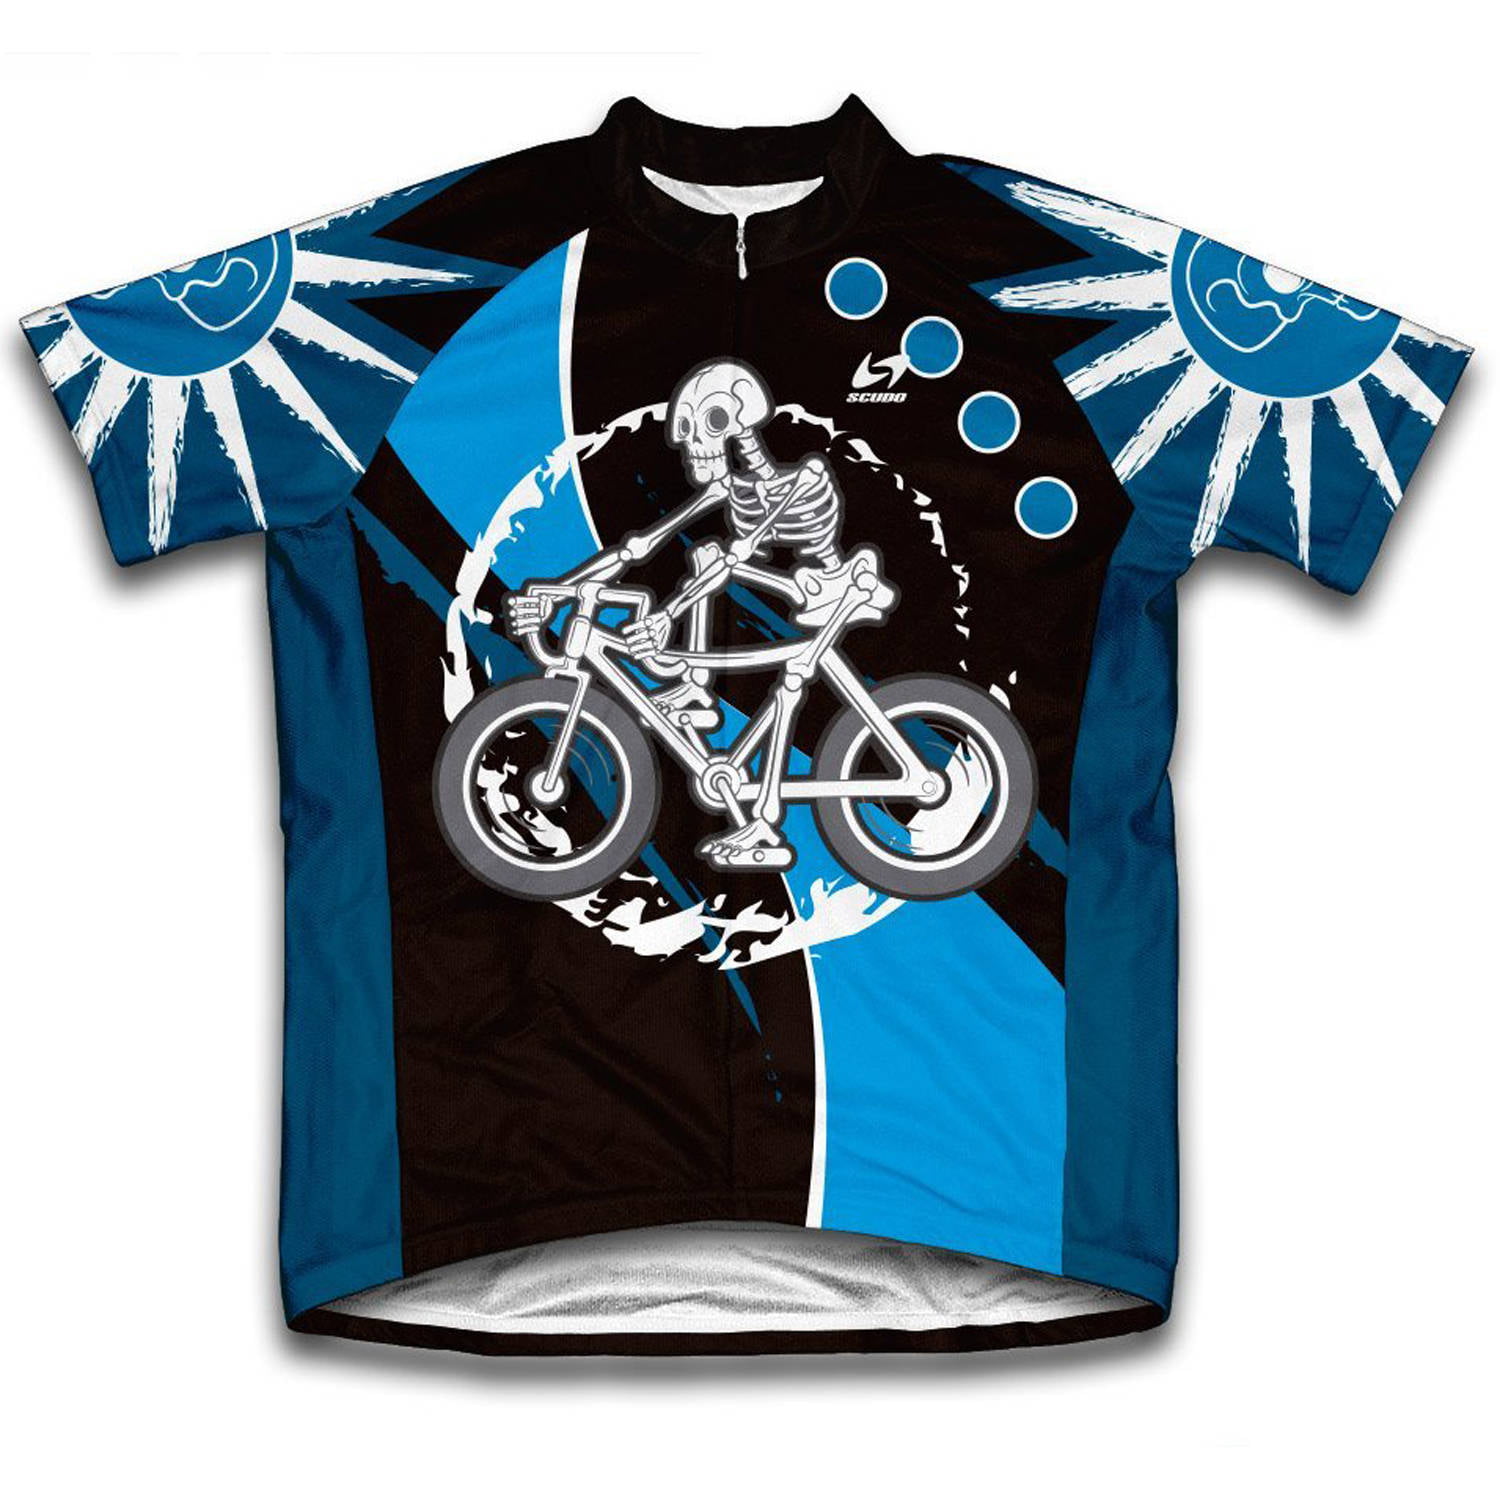 Mens Cycling Jerseys Suits Short Sleeve Bike Clothing Kit Skeleton Design Medium 